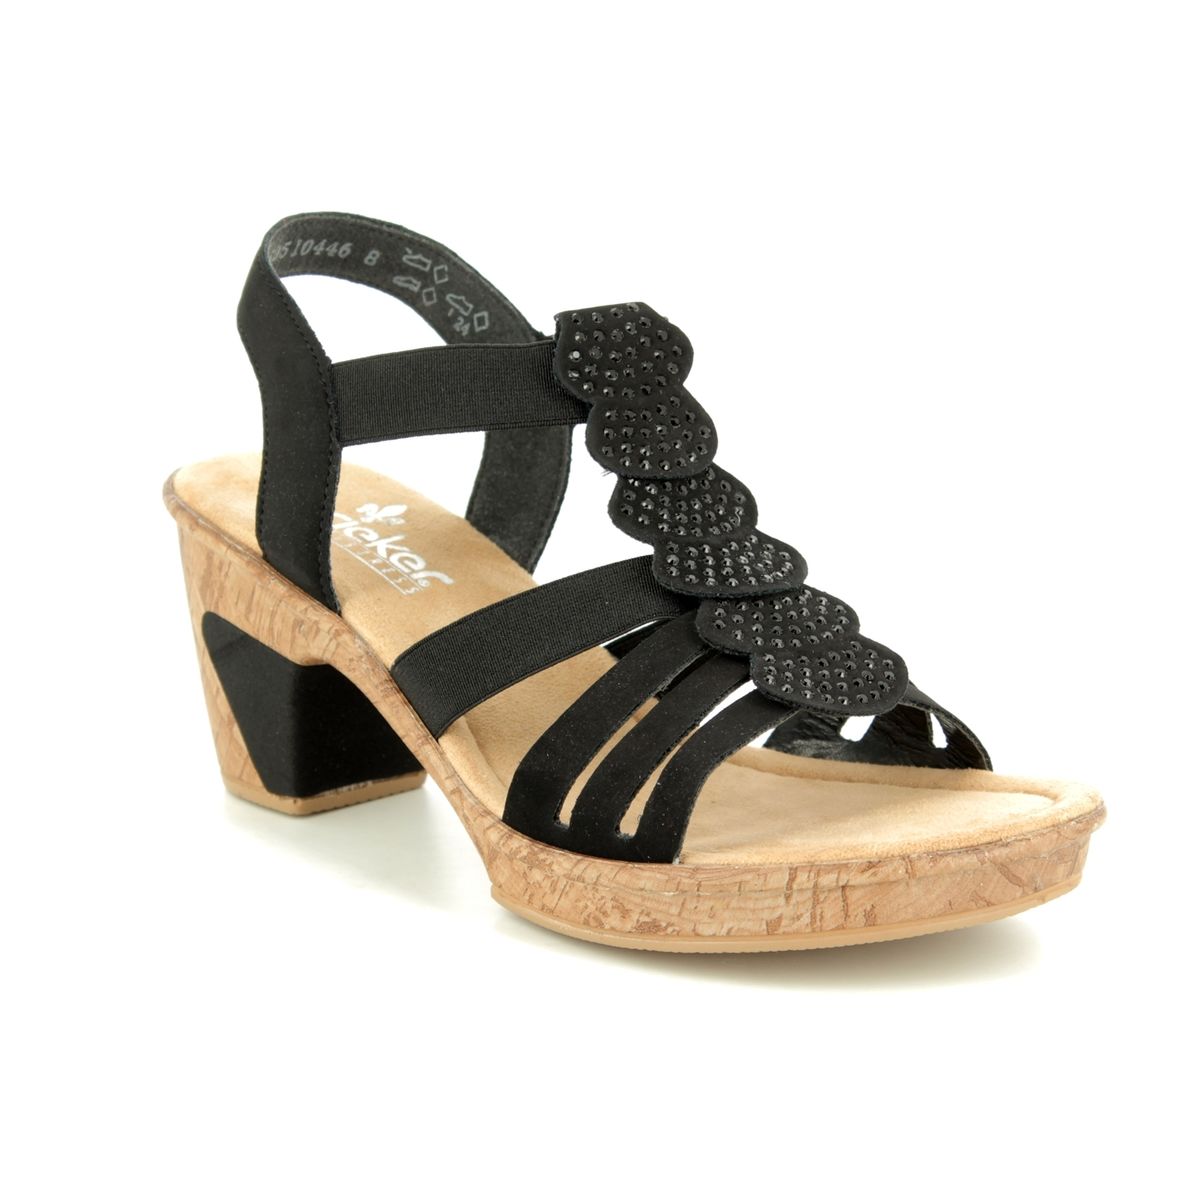 Rieker 69702-00 Black sandals